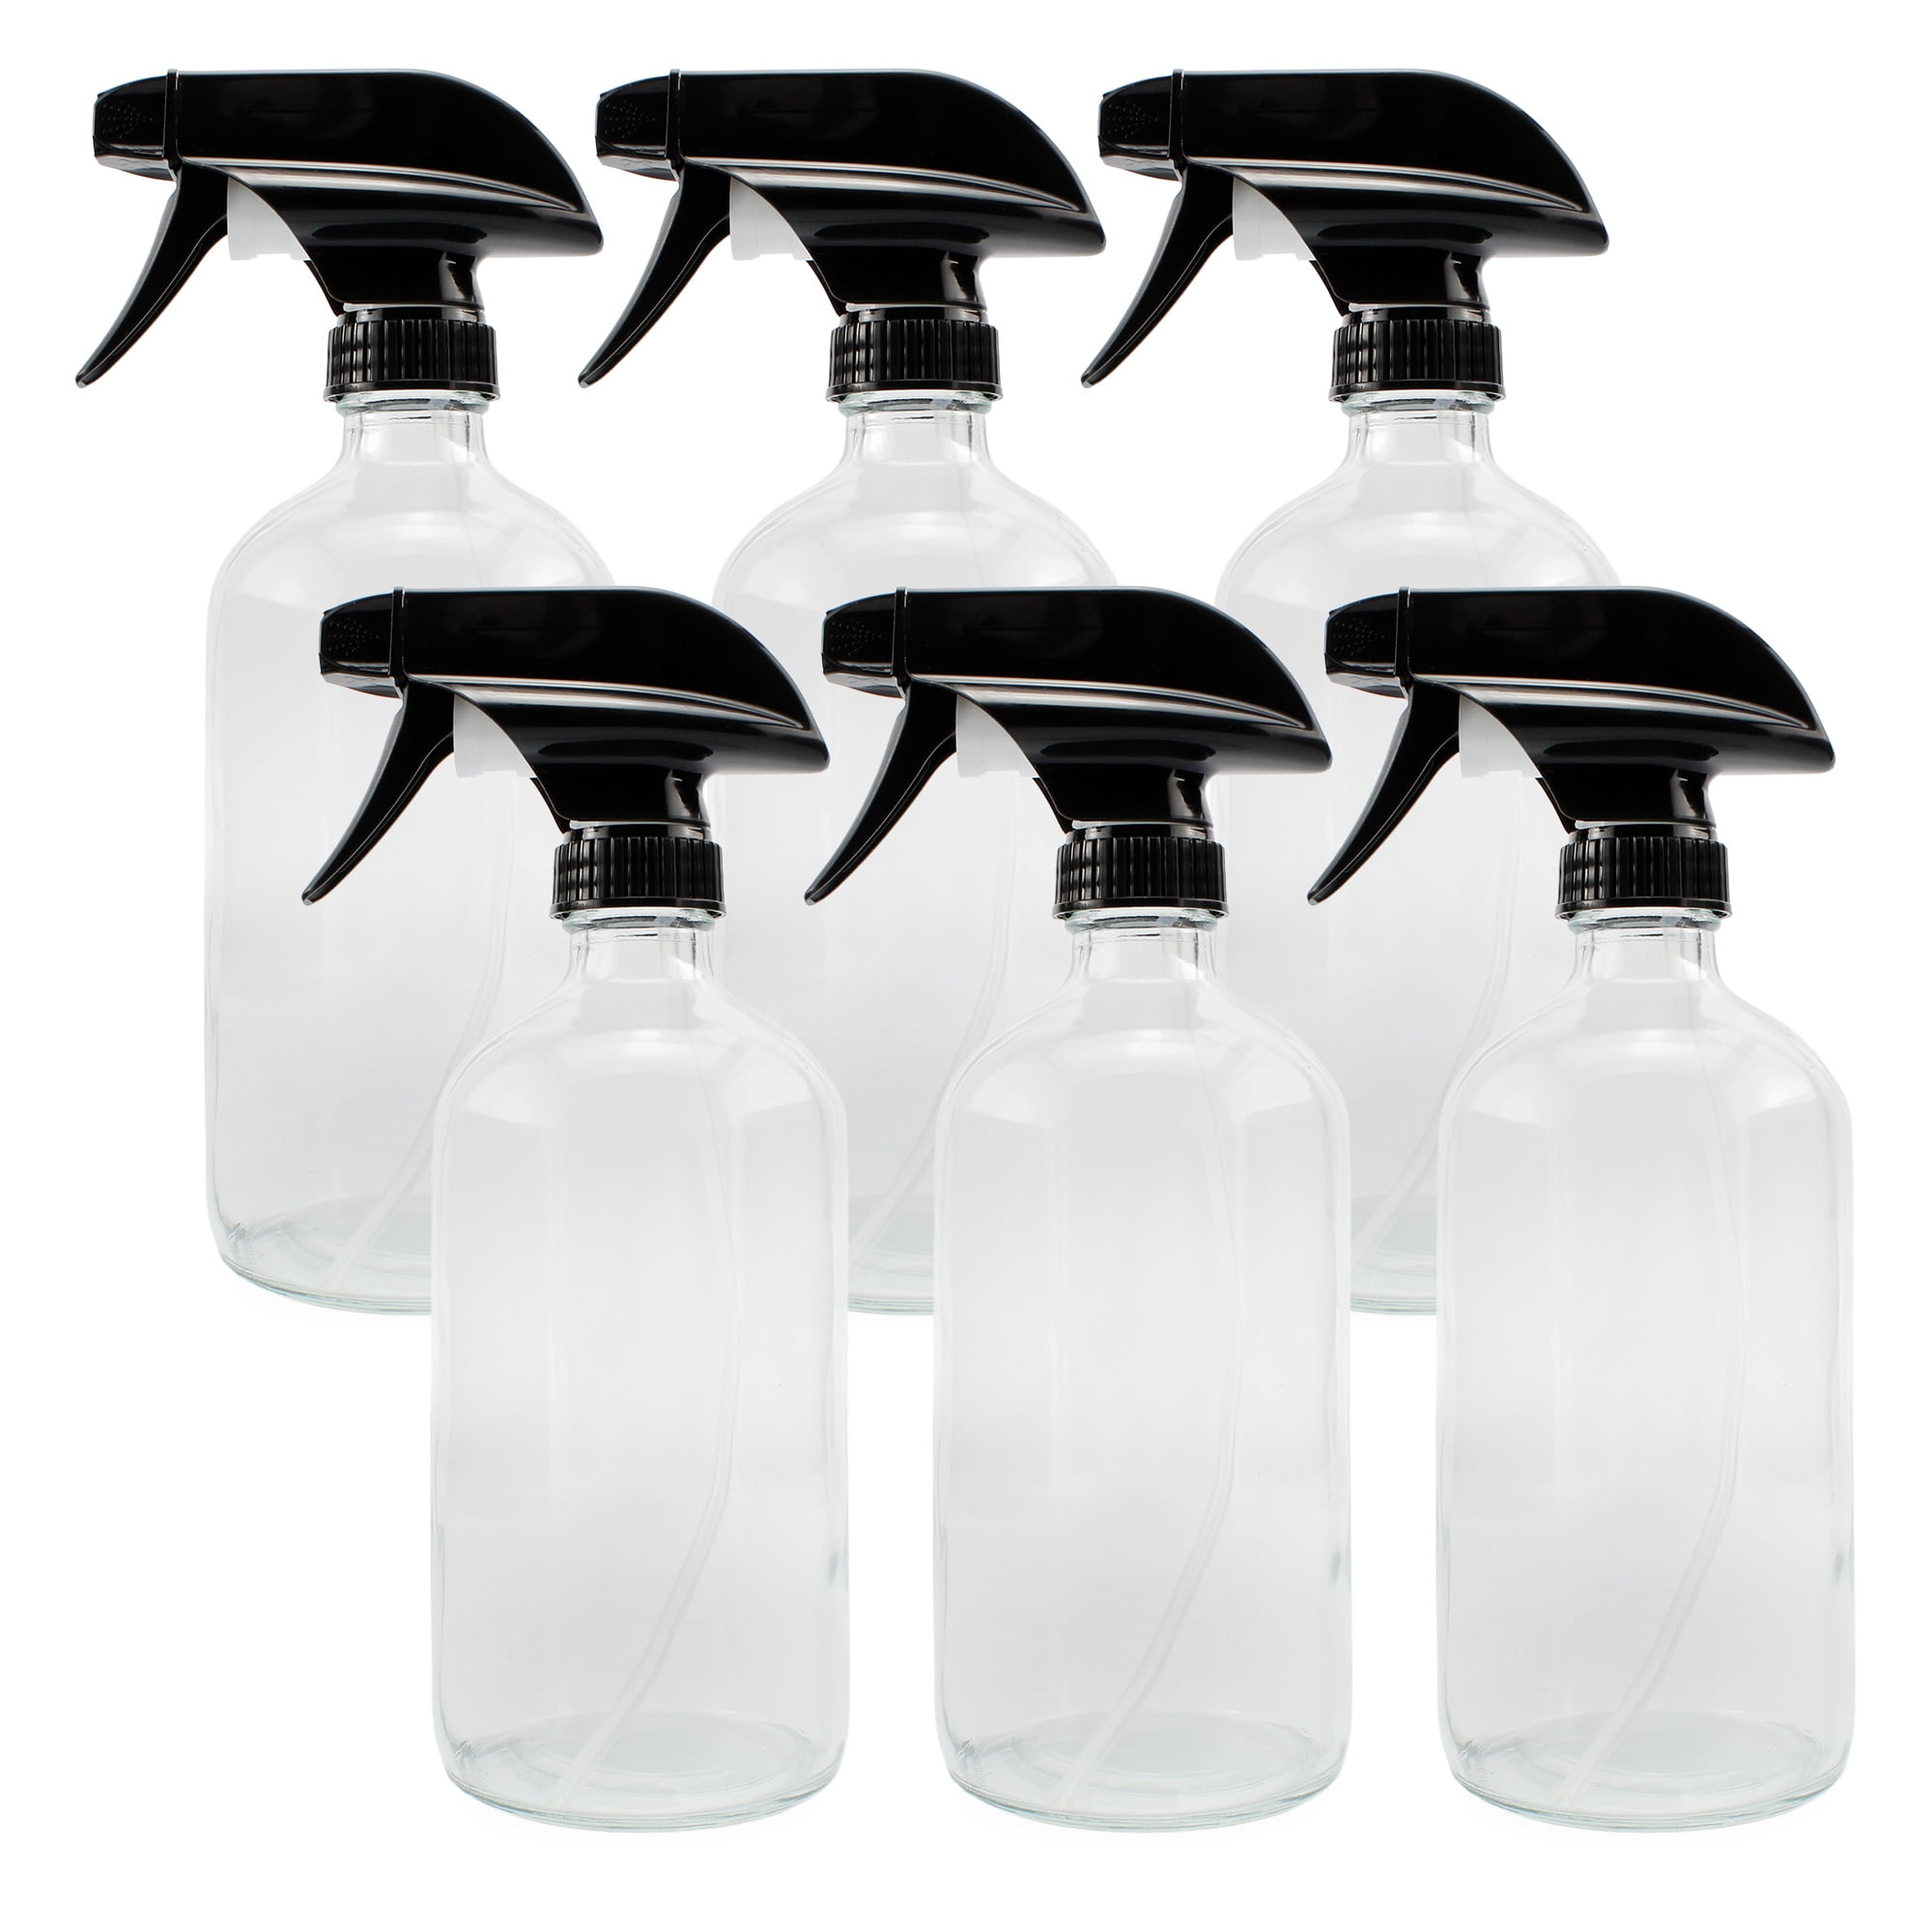 PRO-SOURCE 16 oz. Translucent Plastic Spray Bottle 916B - 65-661-1